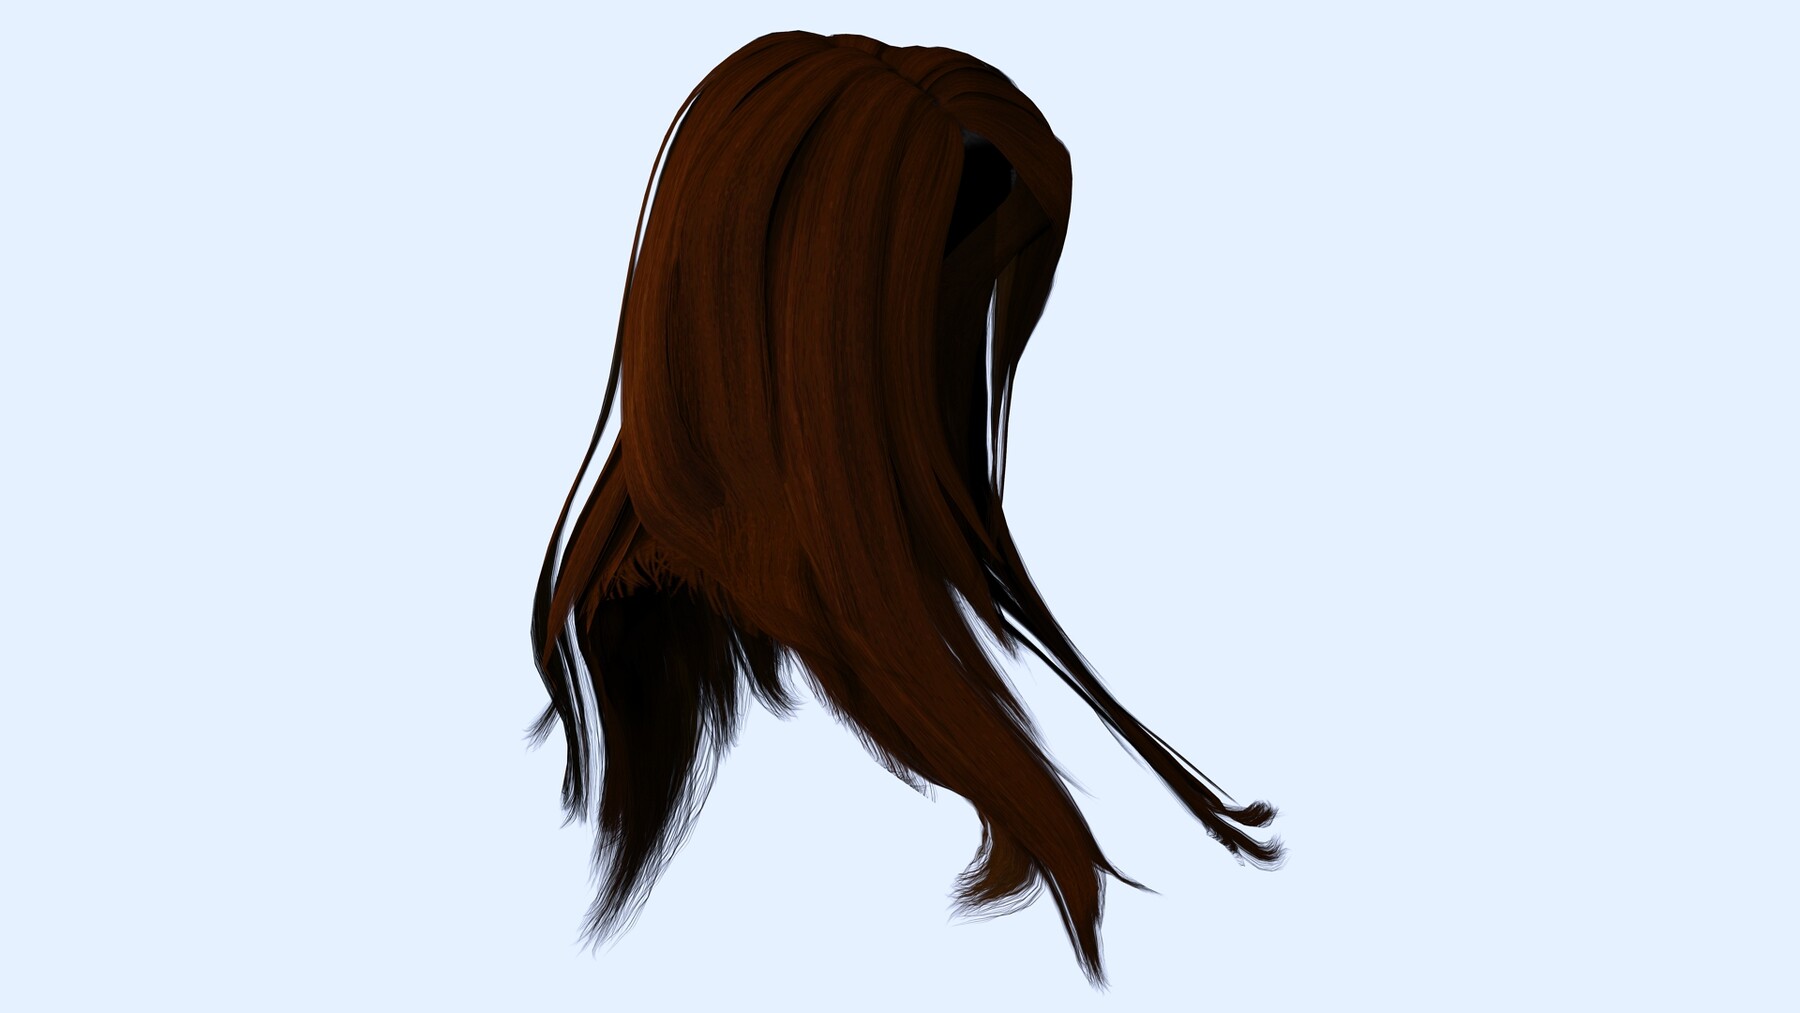 ArtStation - Realistic Long Female hair